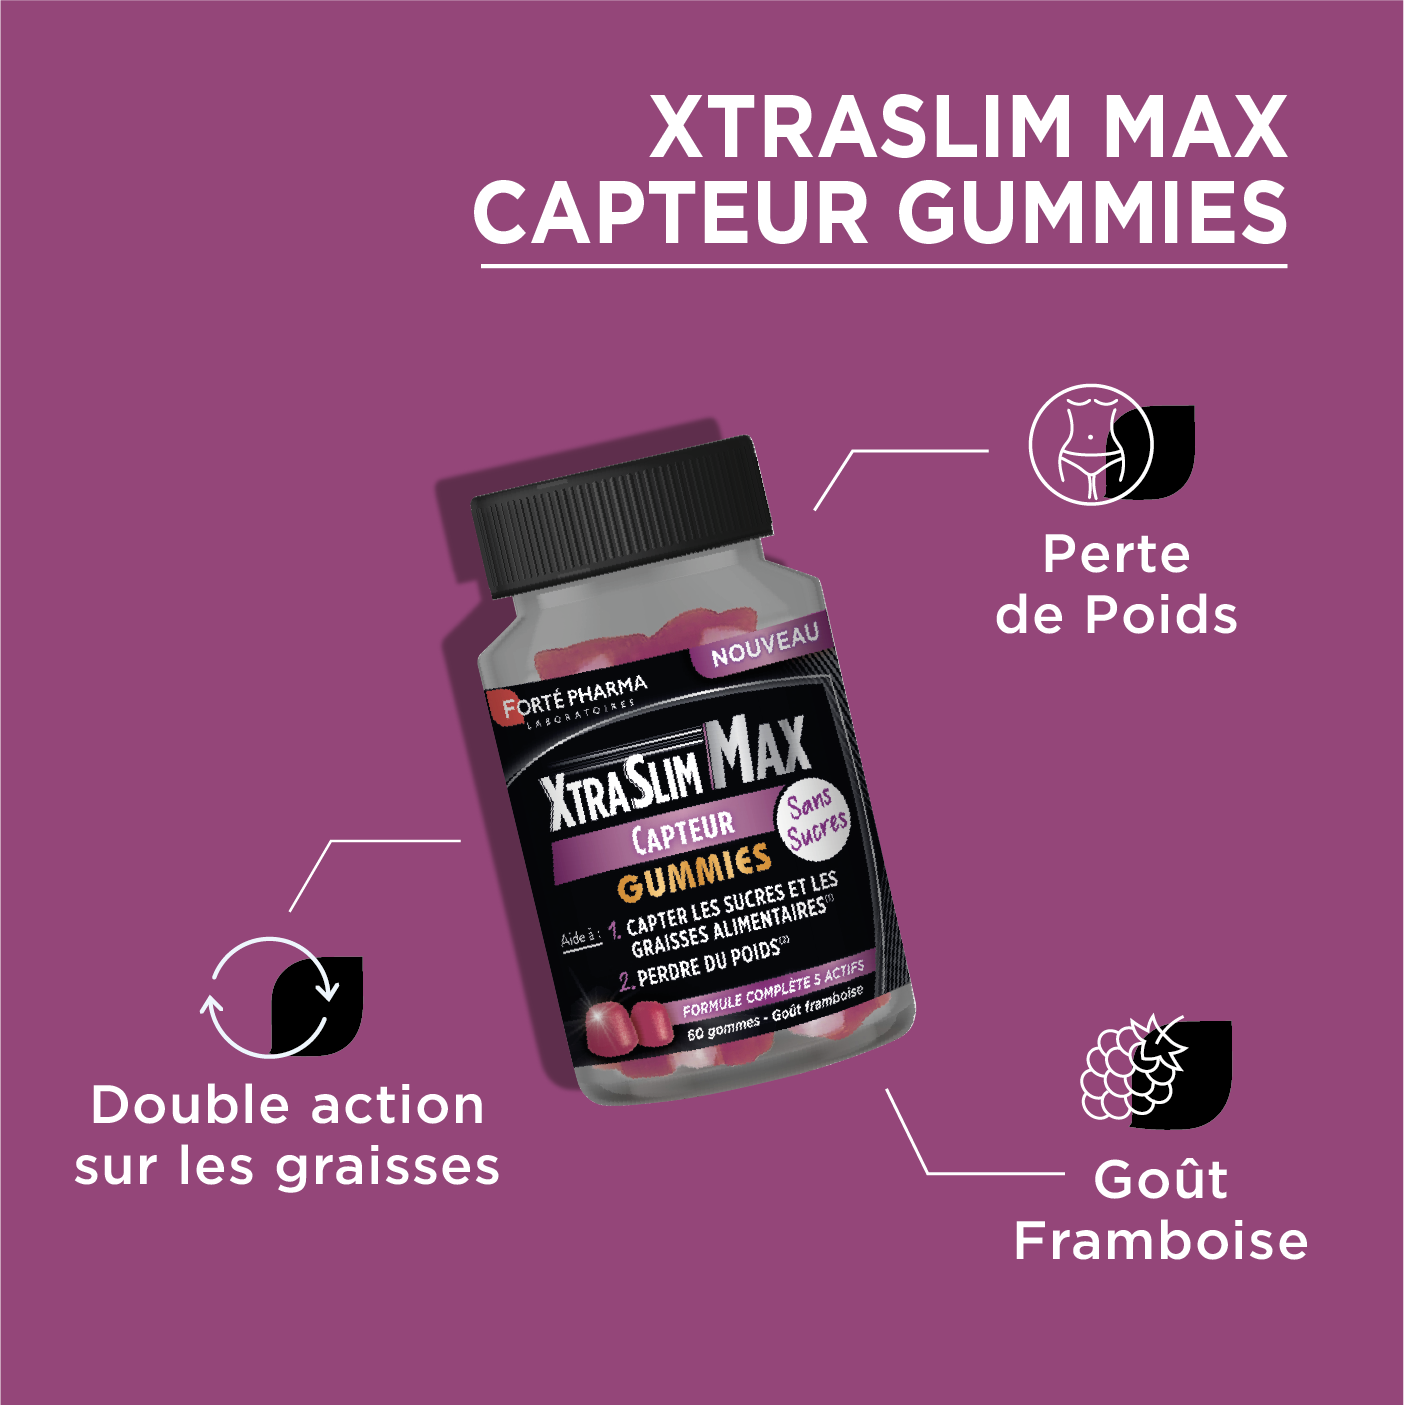 XtraSlim Max Capteur Gummies